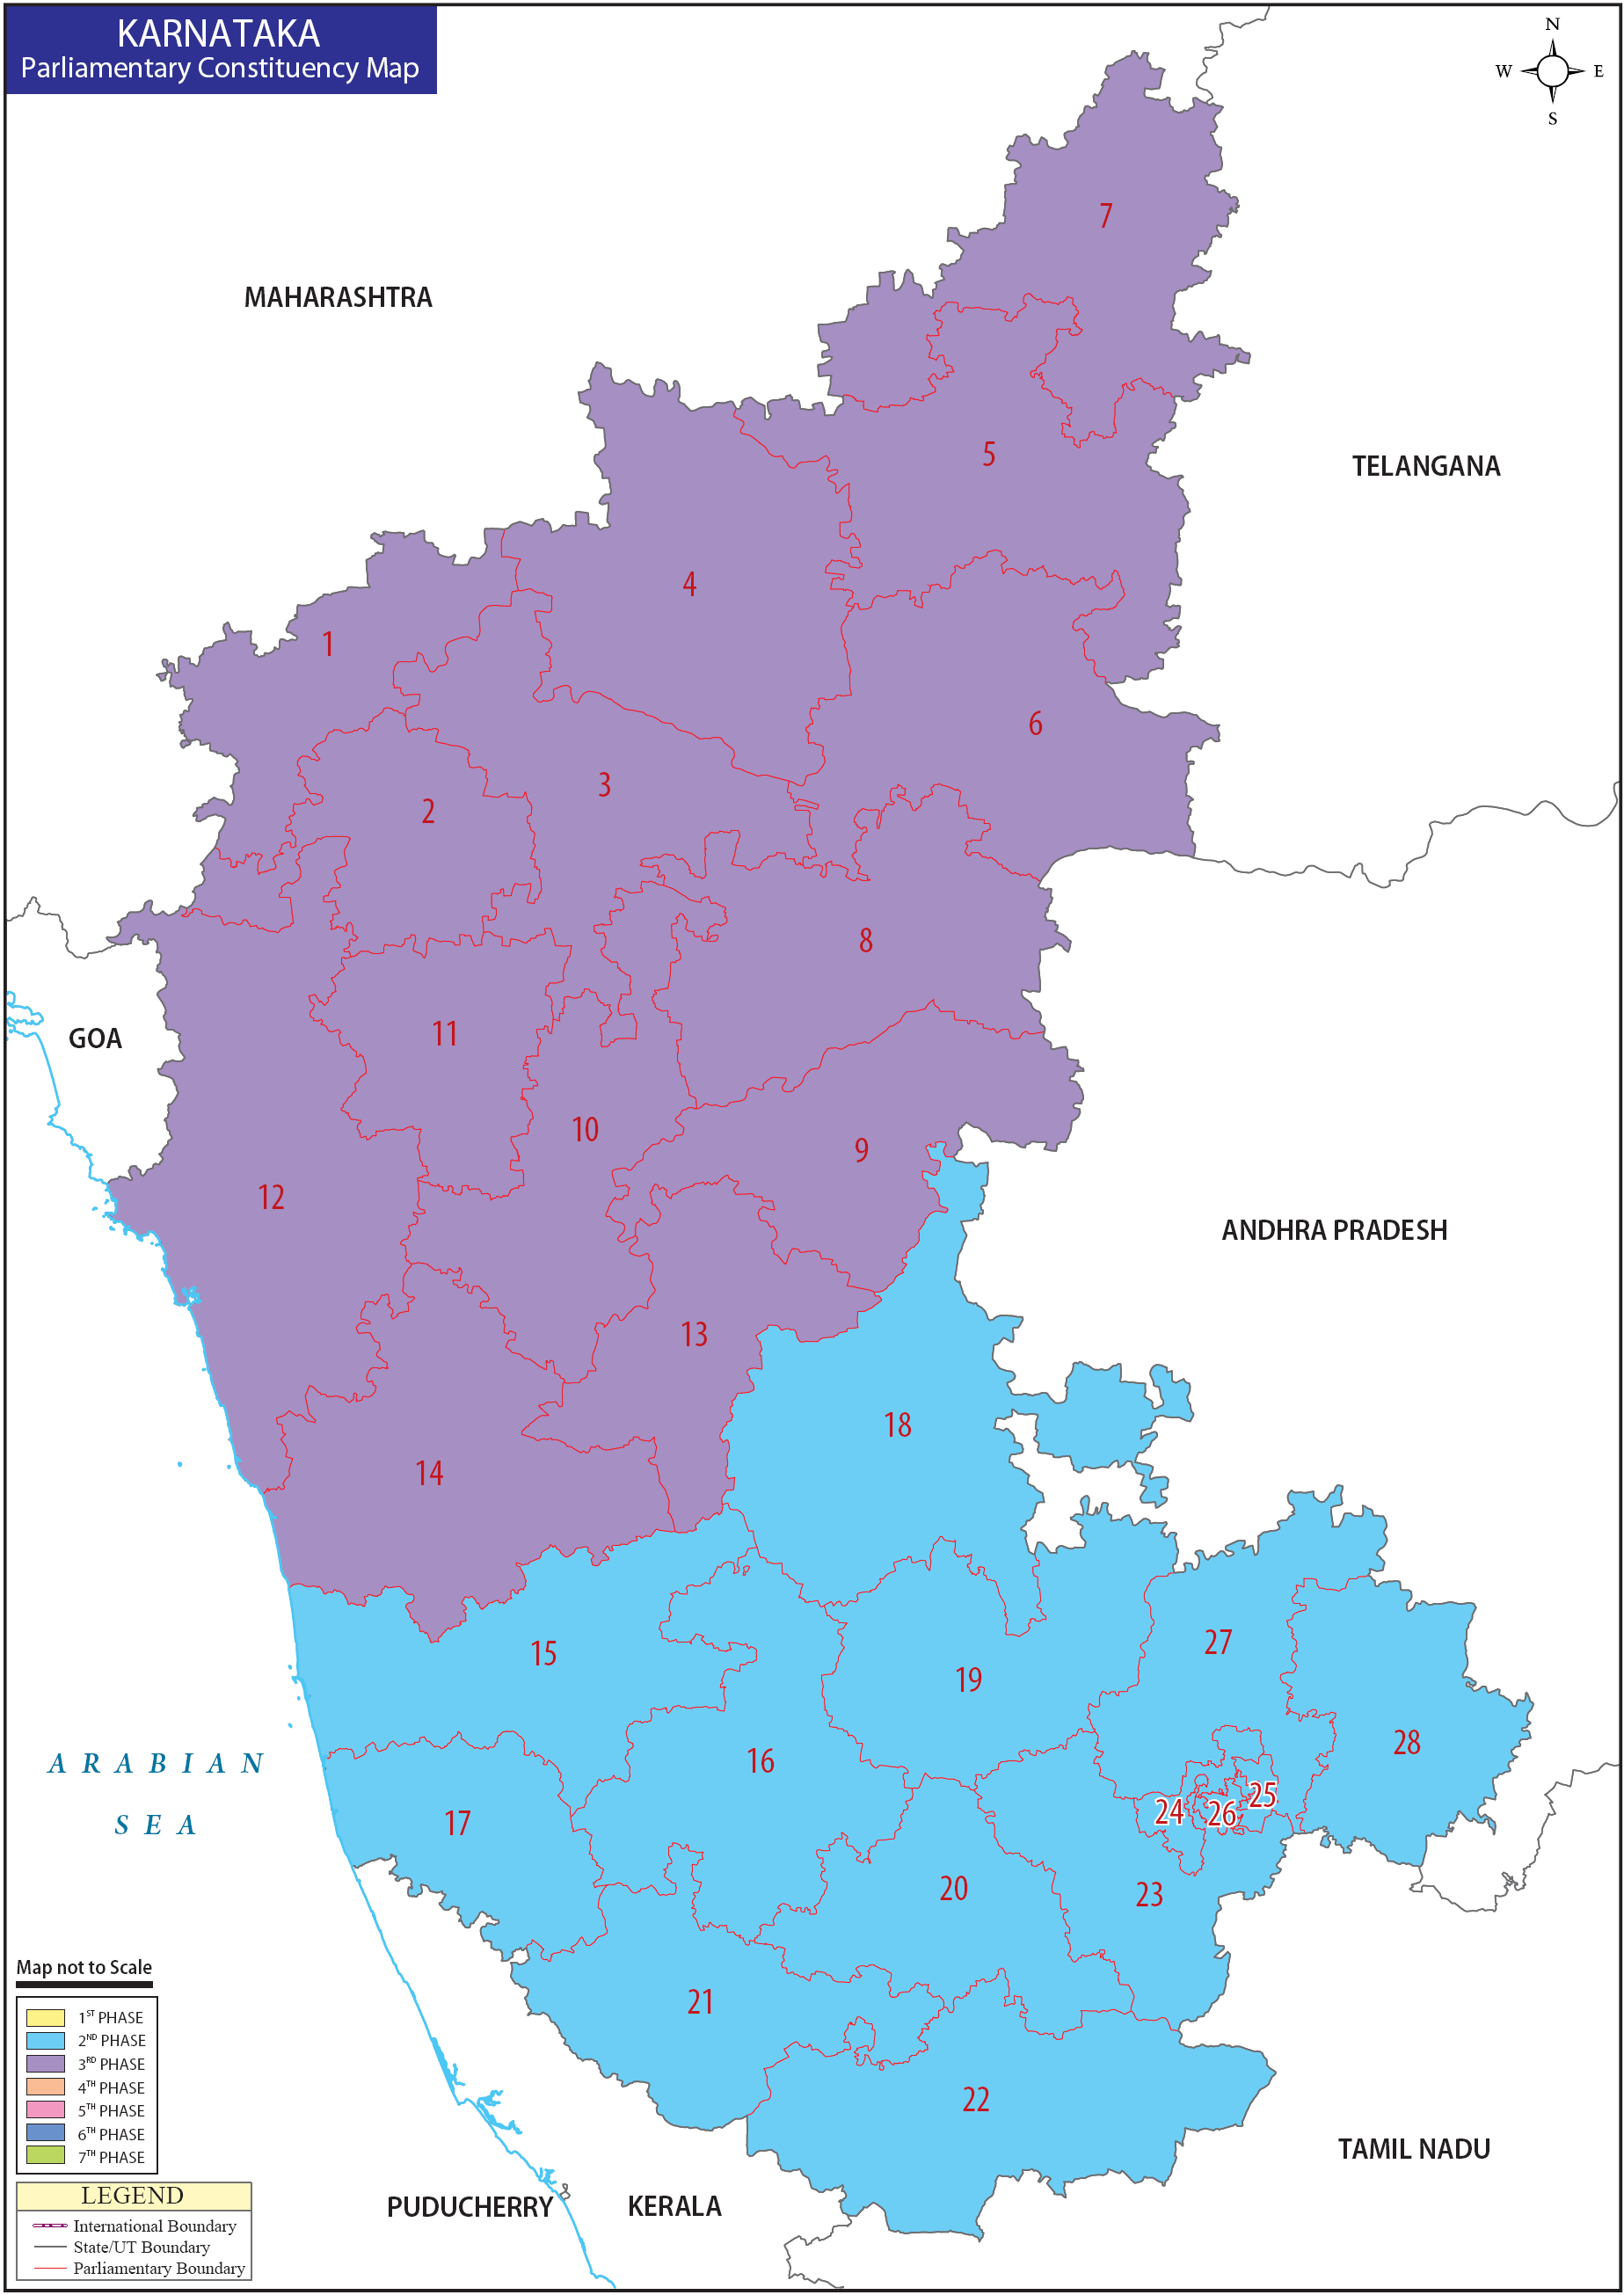 Karnataka Parliamentary Constituency Map